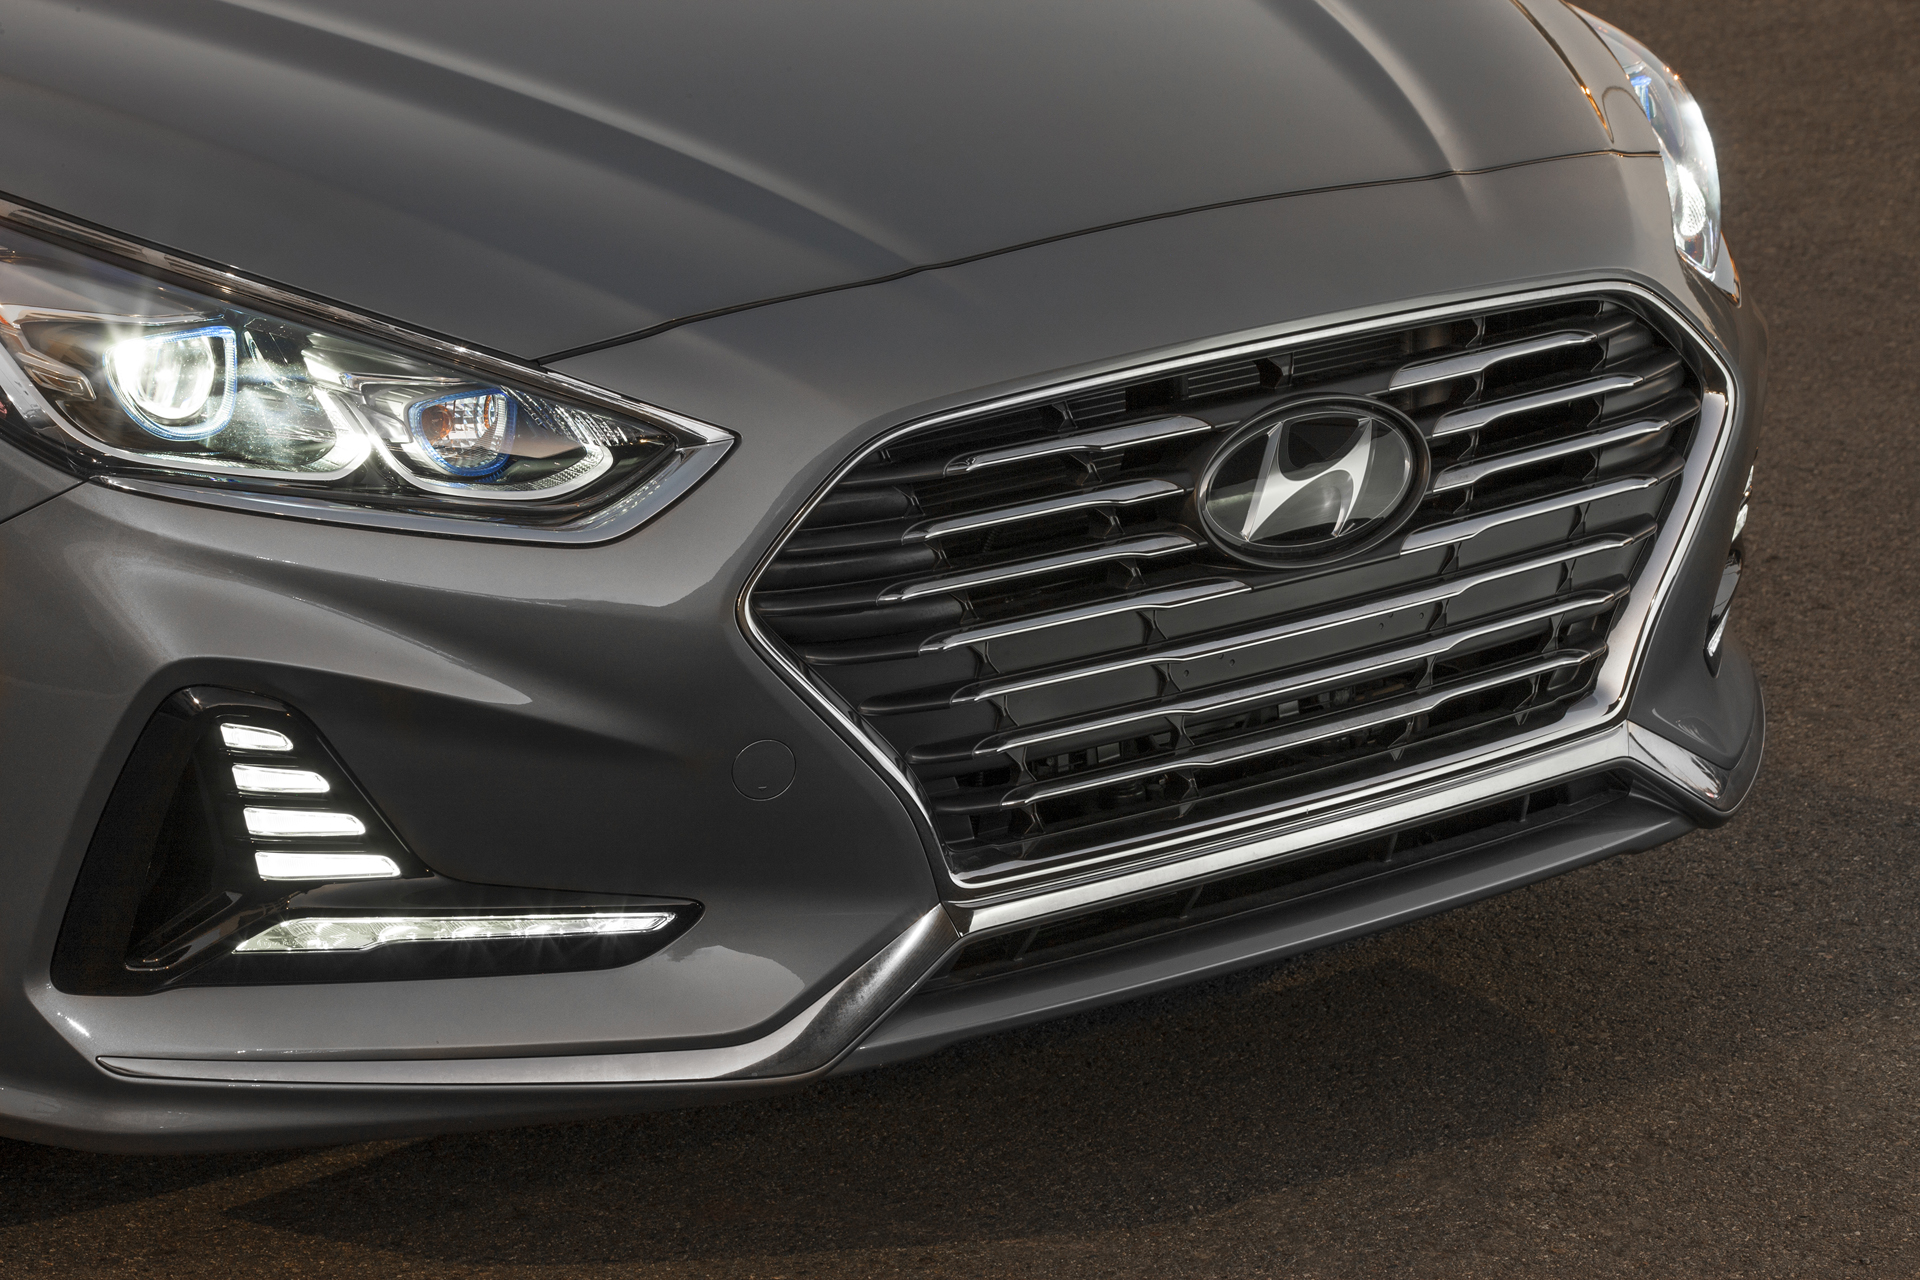 2019 Hyundai Sonata Hybrid and Plug-In Hybrid video preview